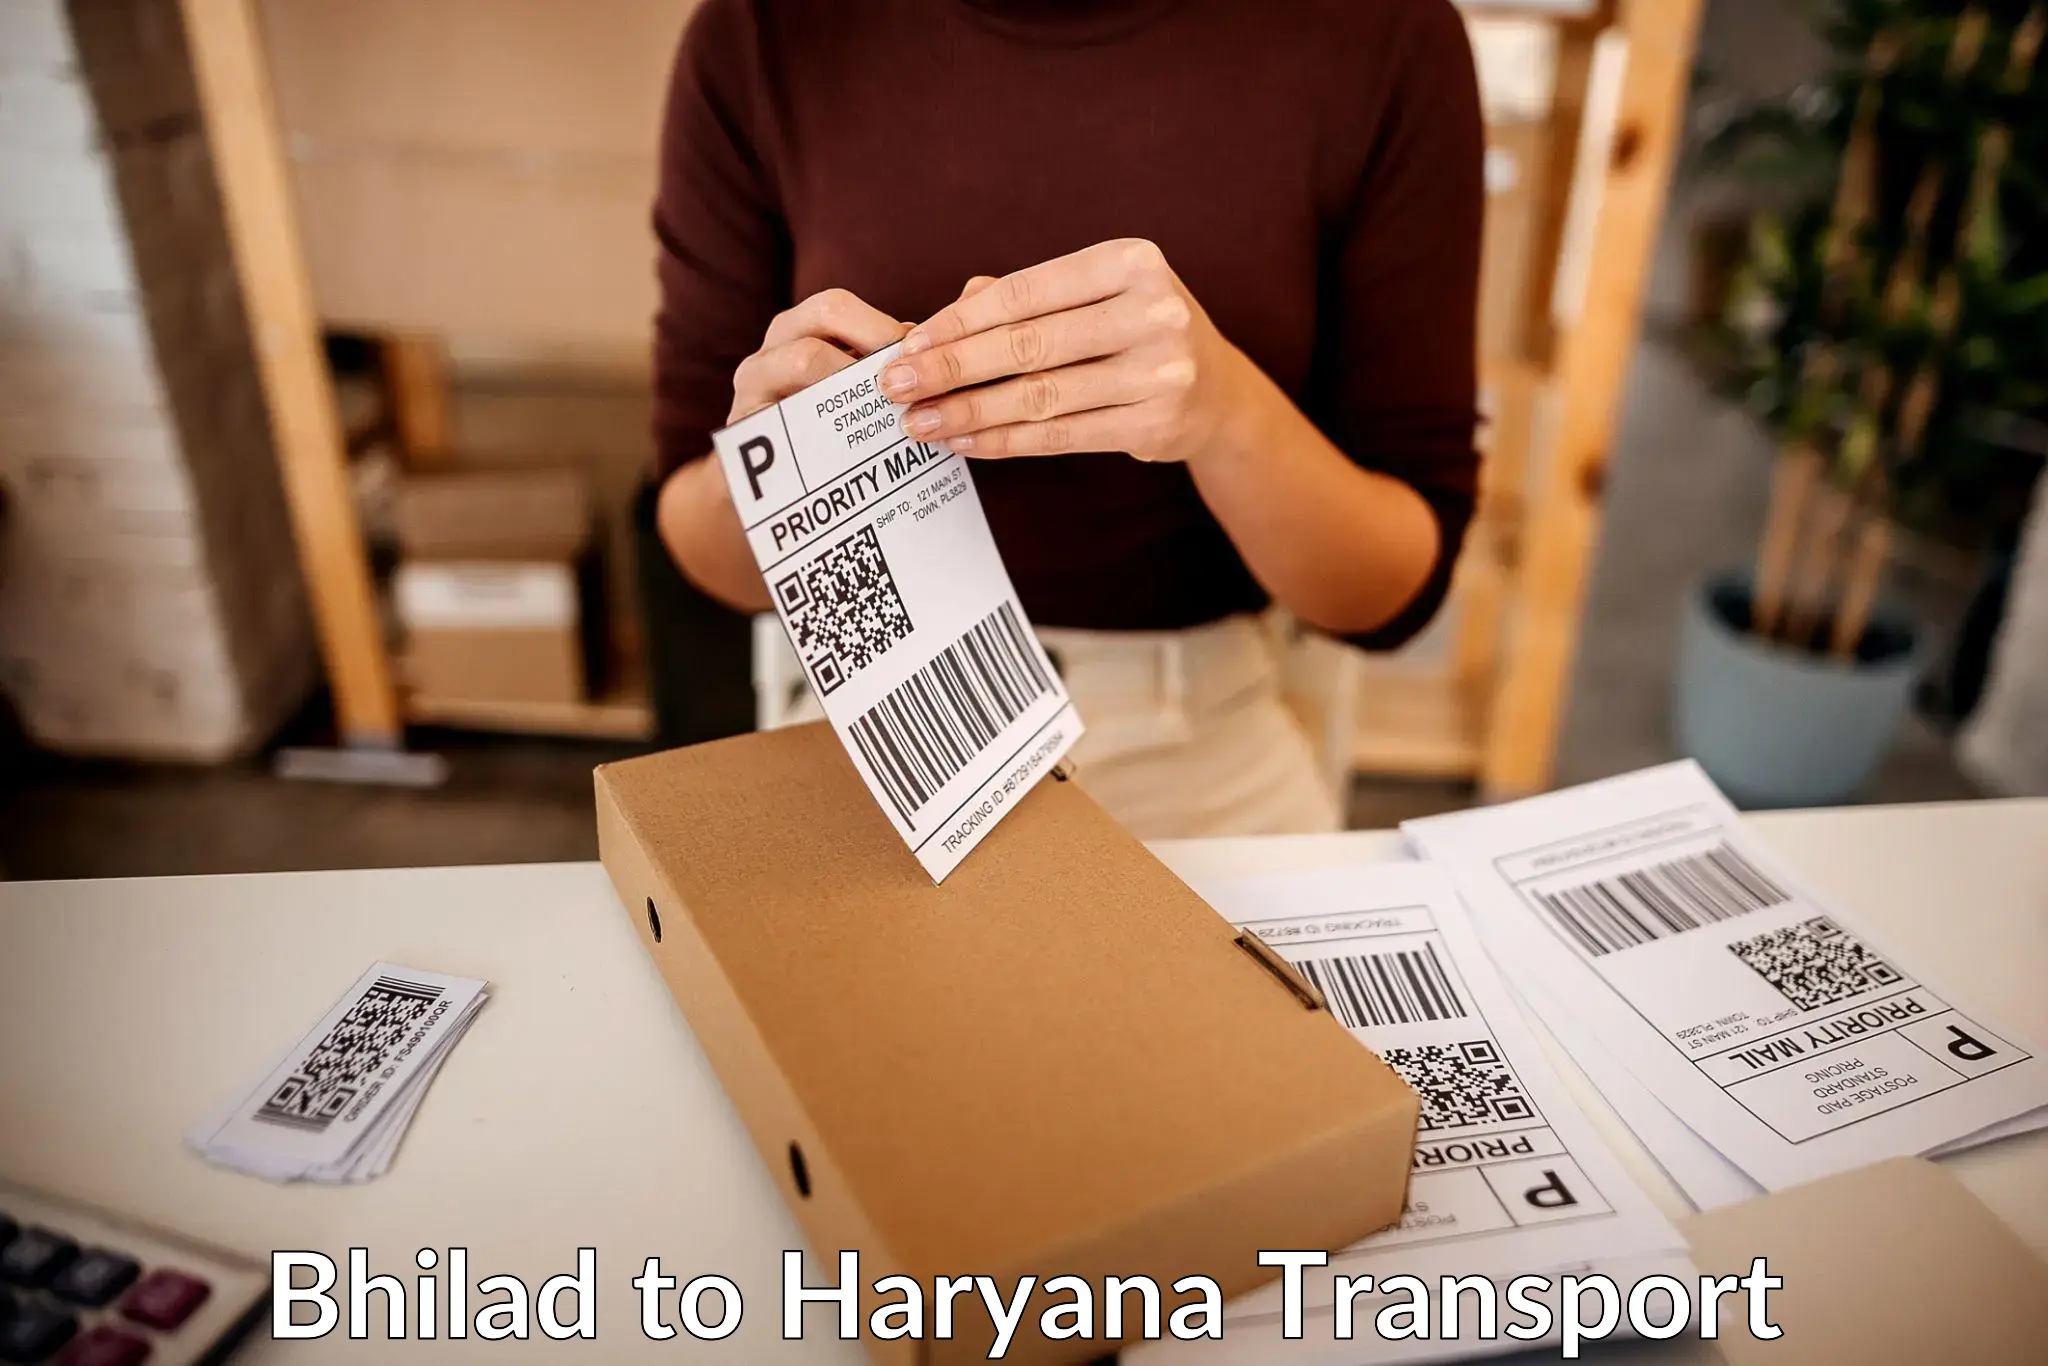 Part load transport service in India Bhilad to Gurugram